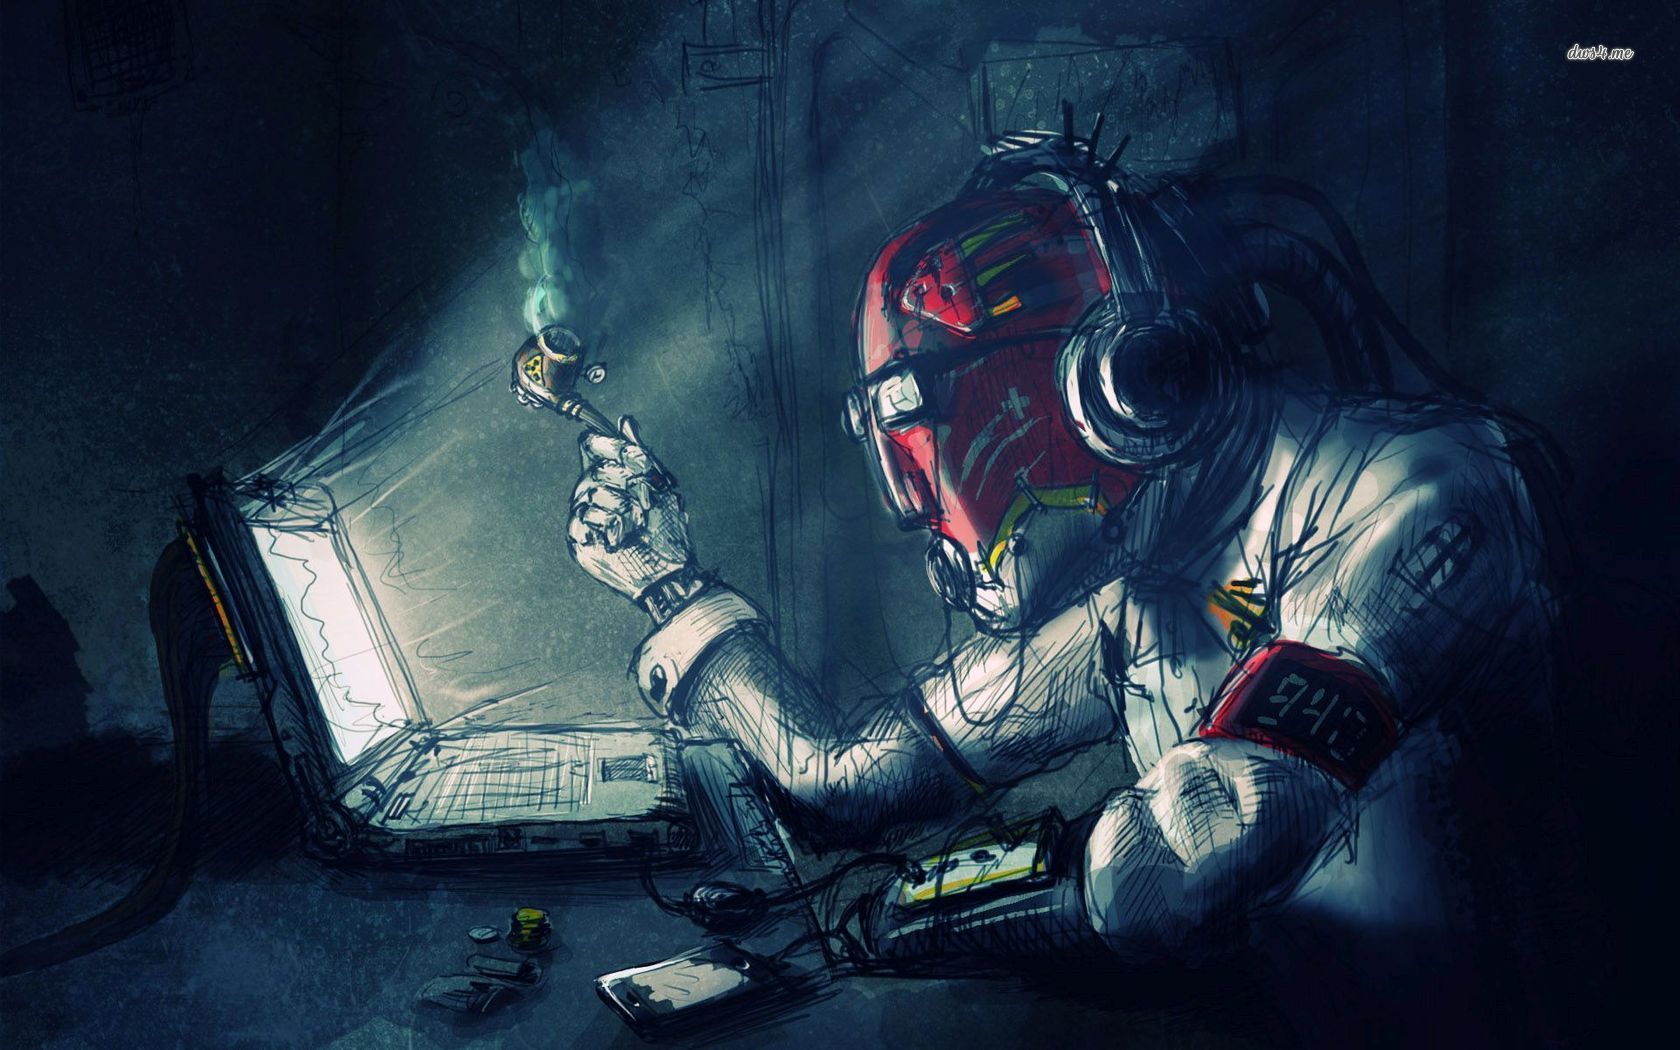 Smoking cyborg wallpaper - Digital Art wallpapers - #28632